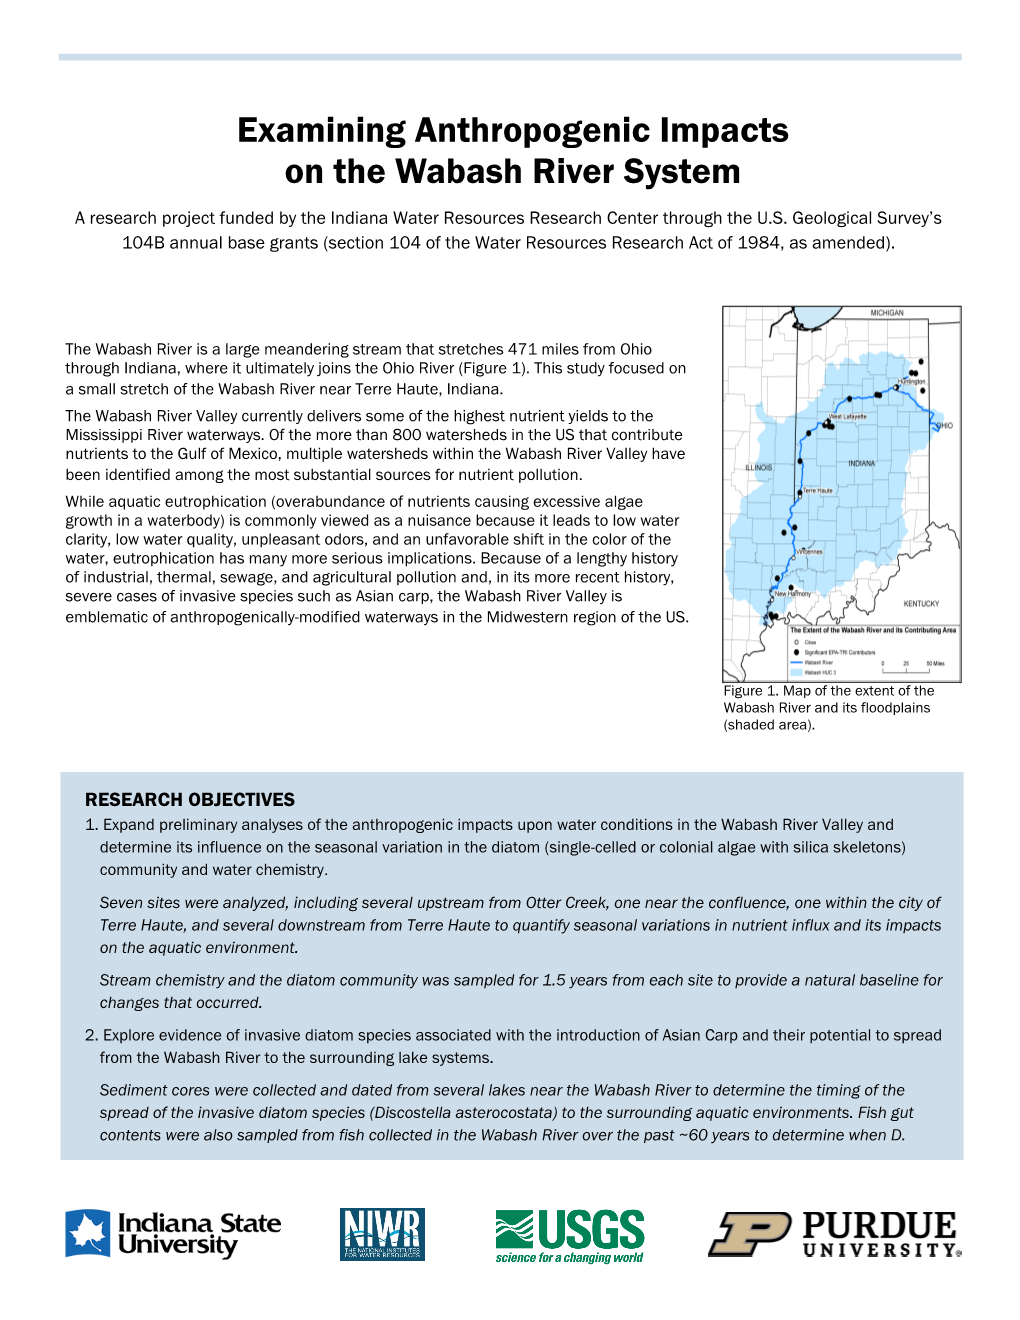 Examining Anthropogenic Impacts on the Wabash River System